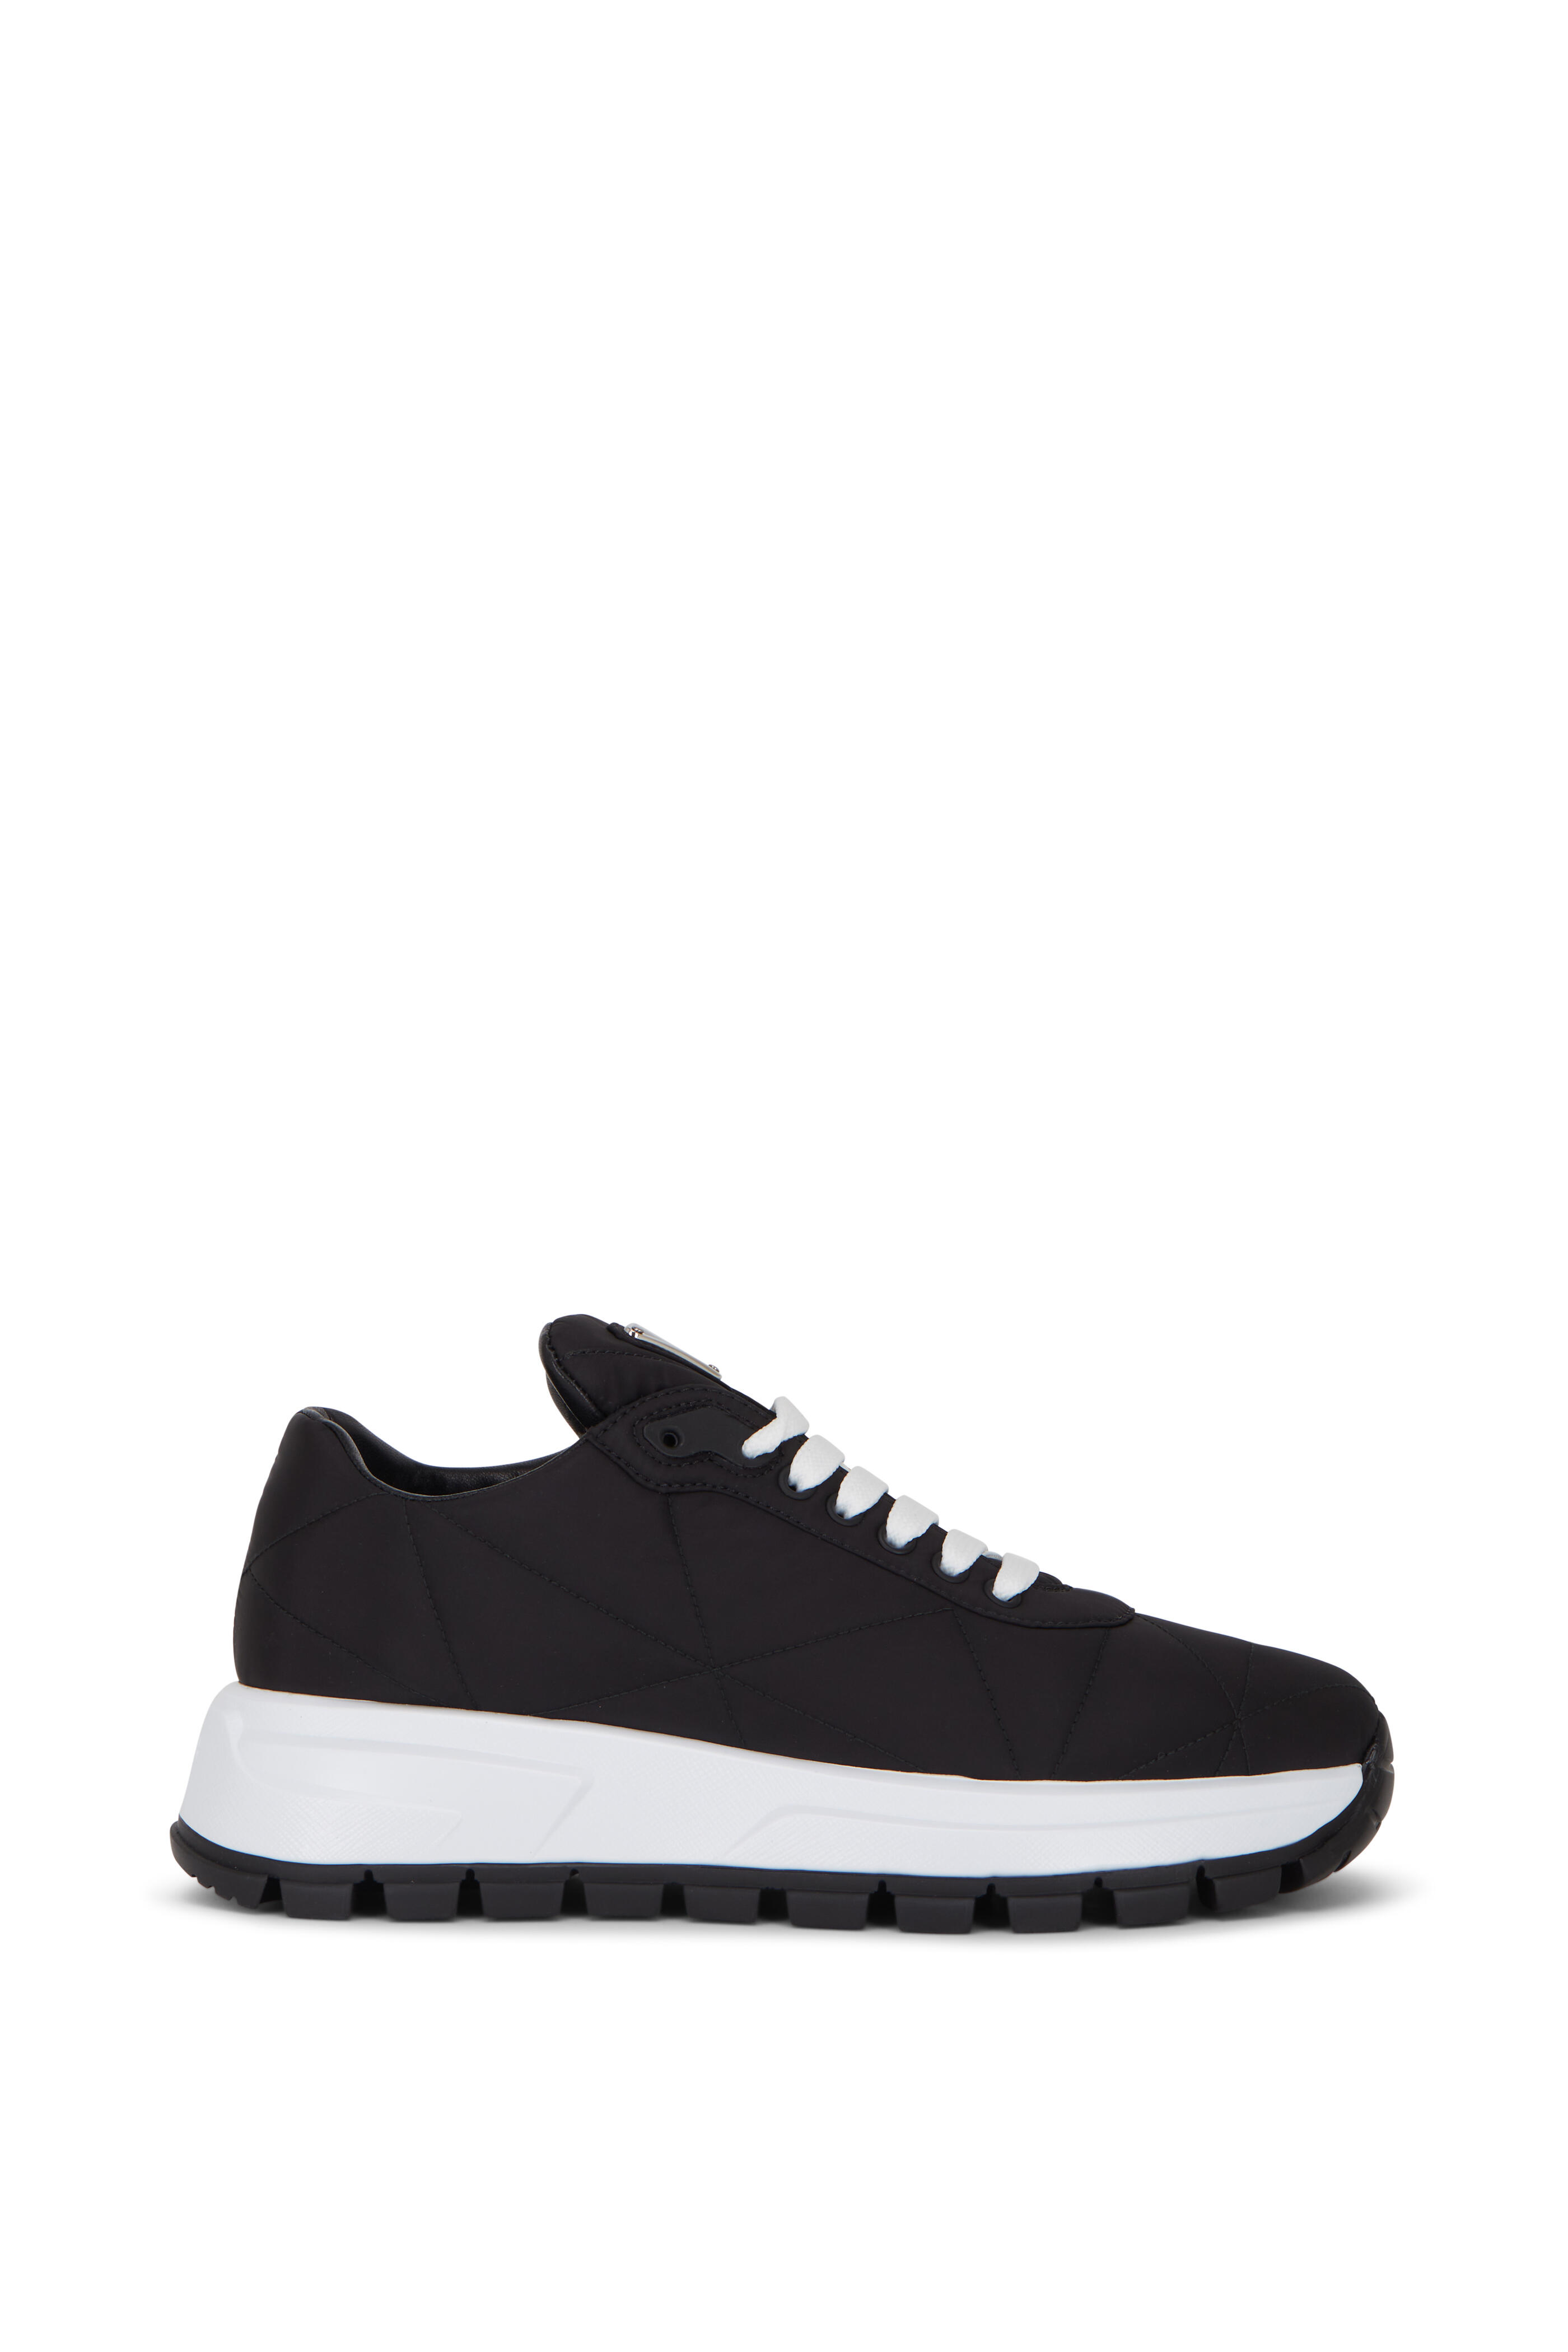 Prada - Prax 01 Black Nylon Low Top Sneaker | Mitchell Stores